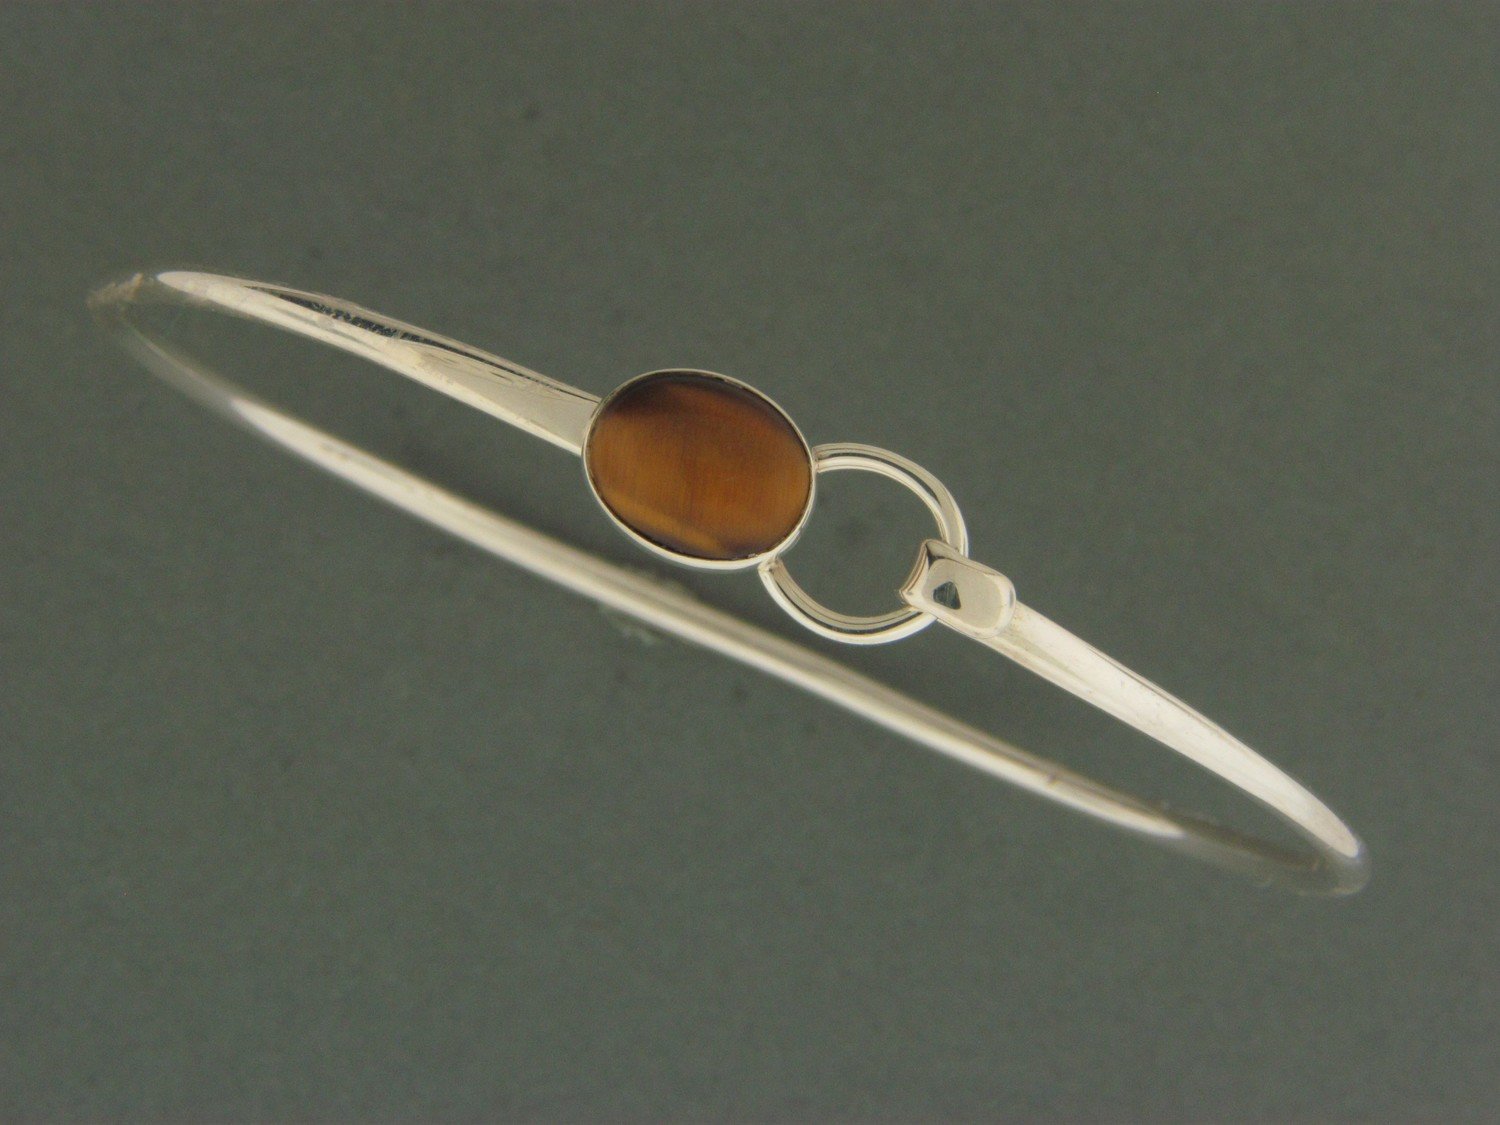 Hook Clasp Bracelet | Sterling Silver 8